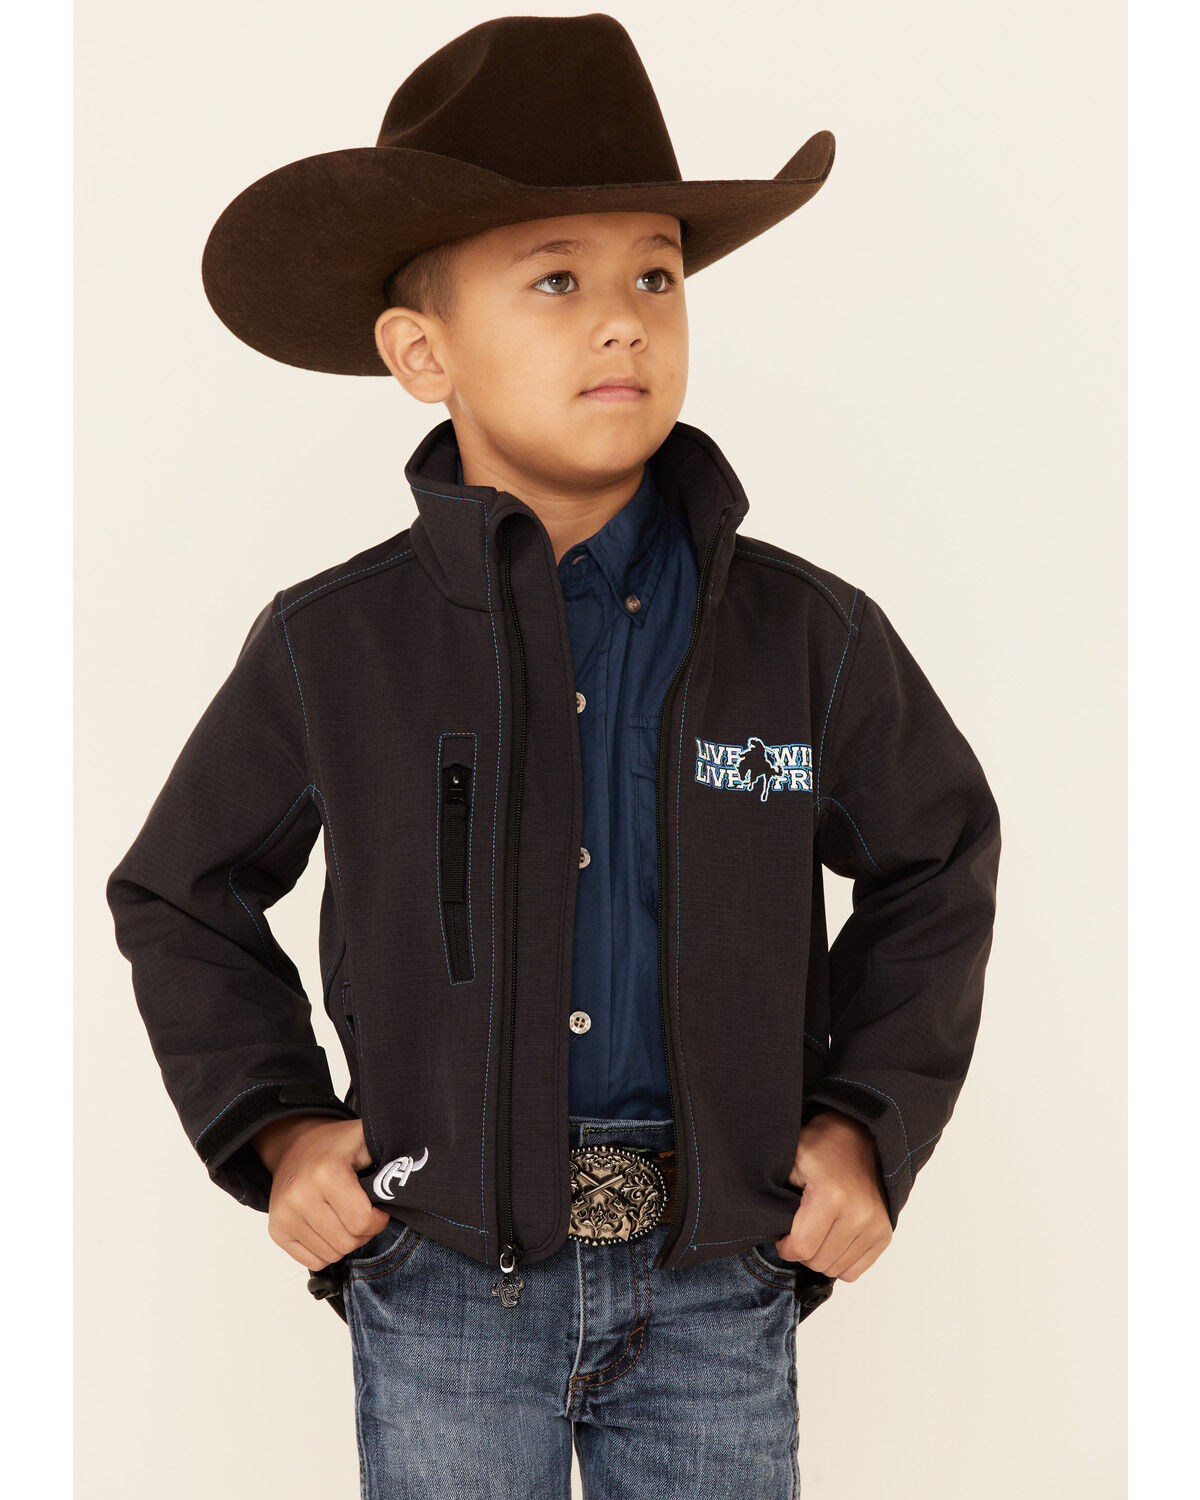 Cowboy Hardware Boys Heather Navy Tough Vest 387100-484